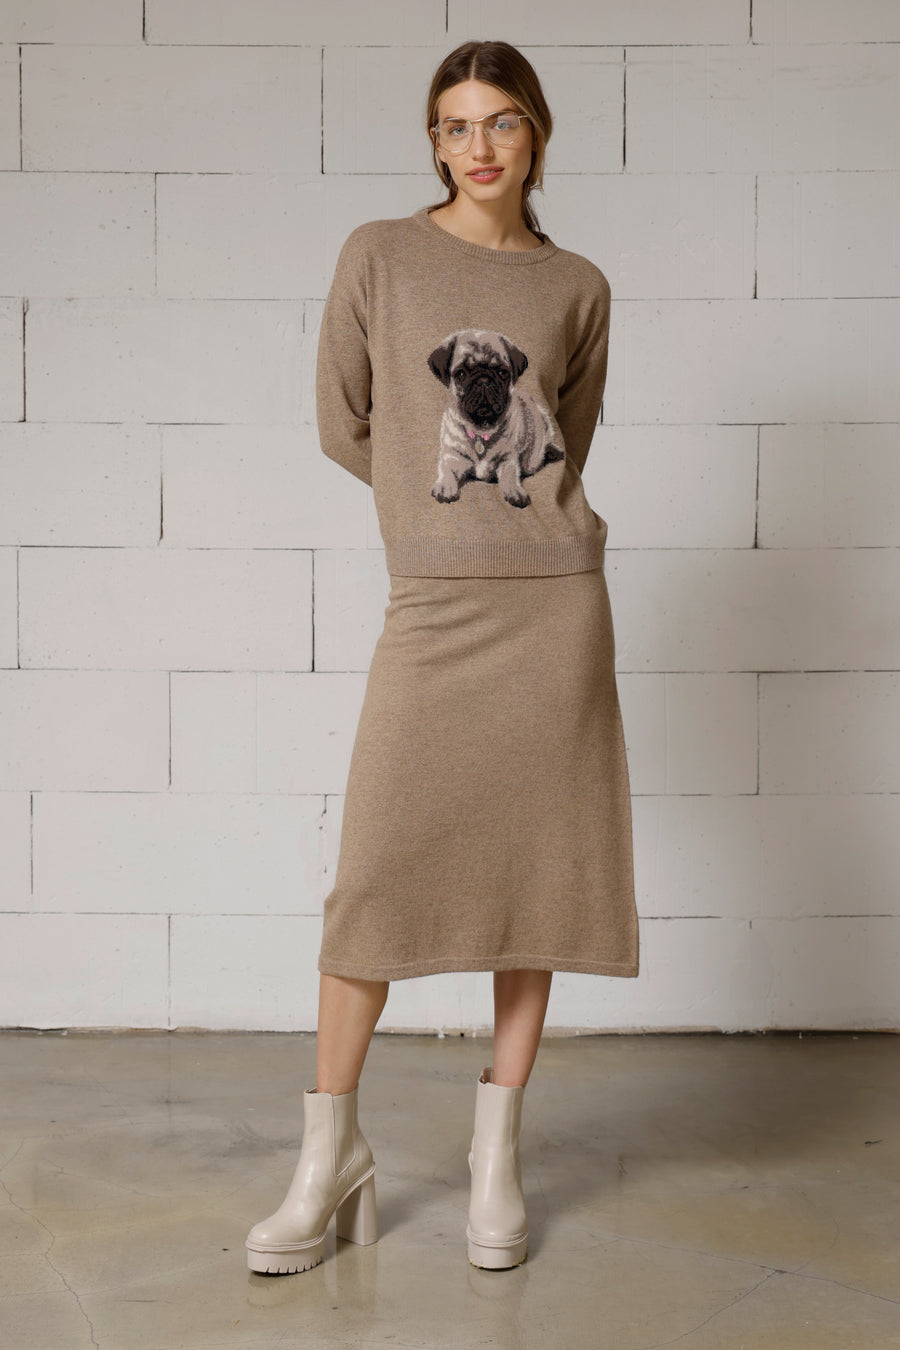 Tina Women's Intarsia Lambswool Sweater with Pug Detail